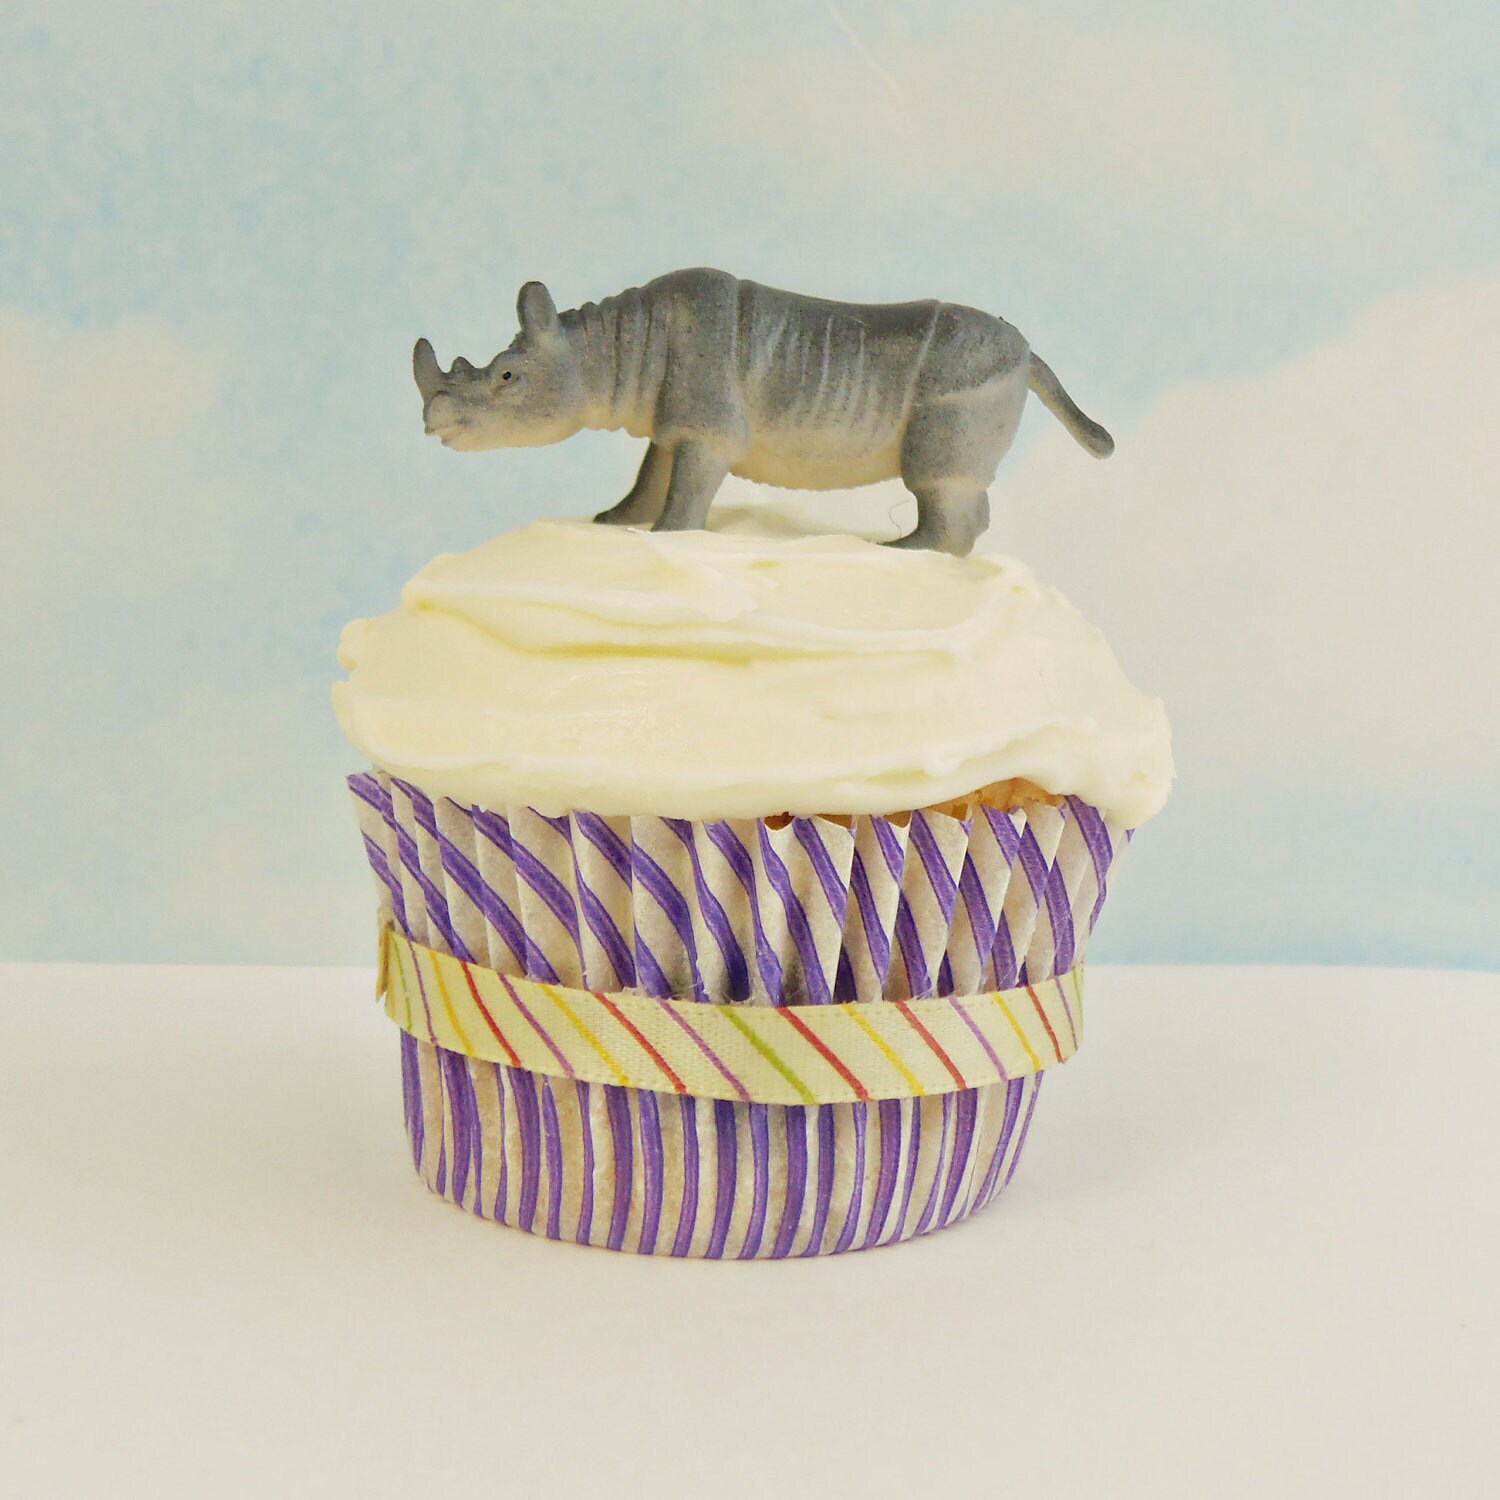 Rhino Cake Topper